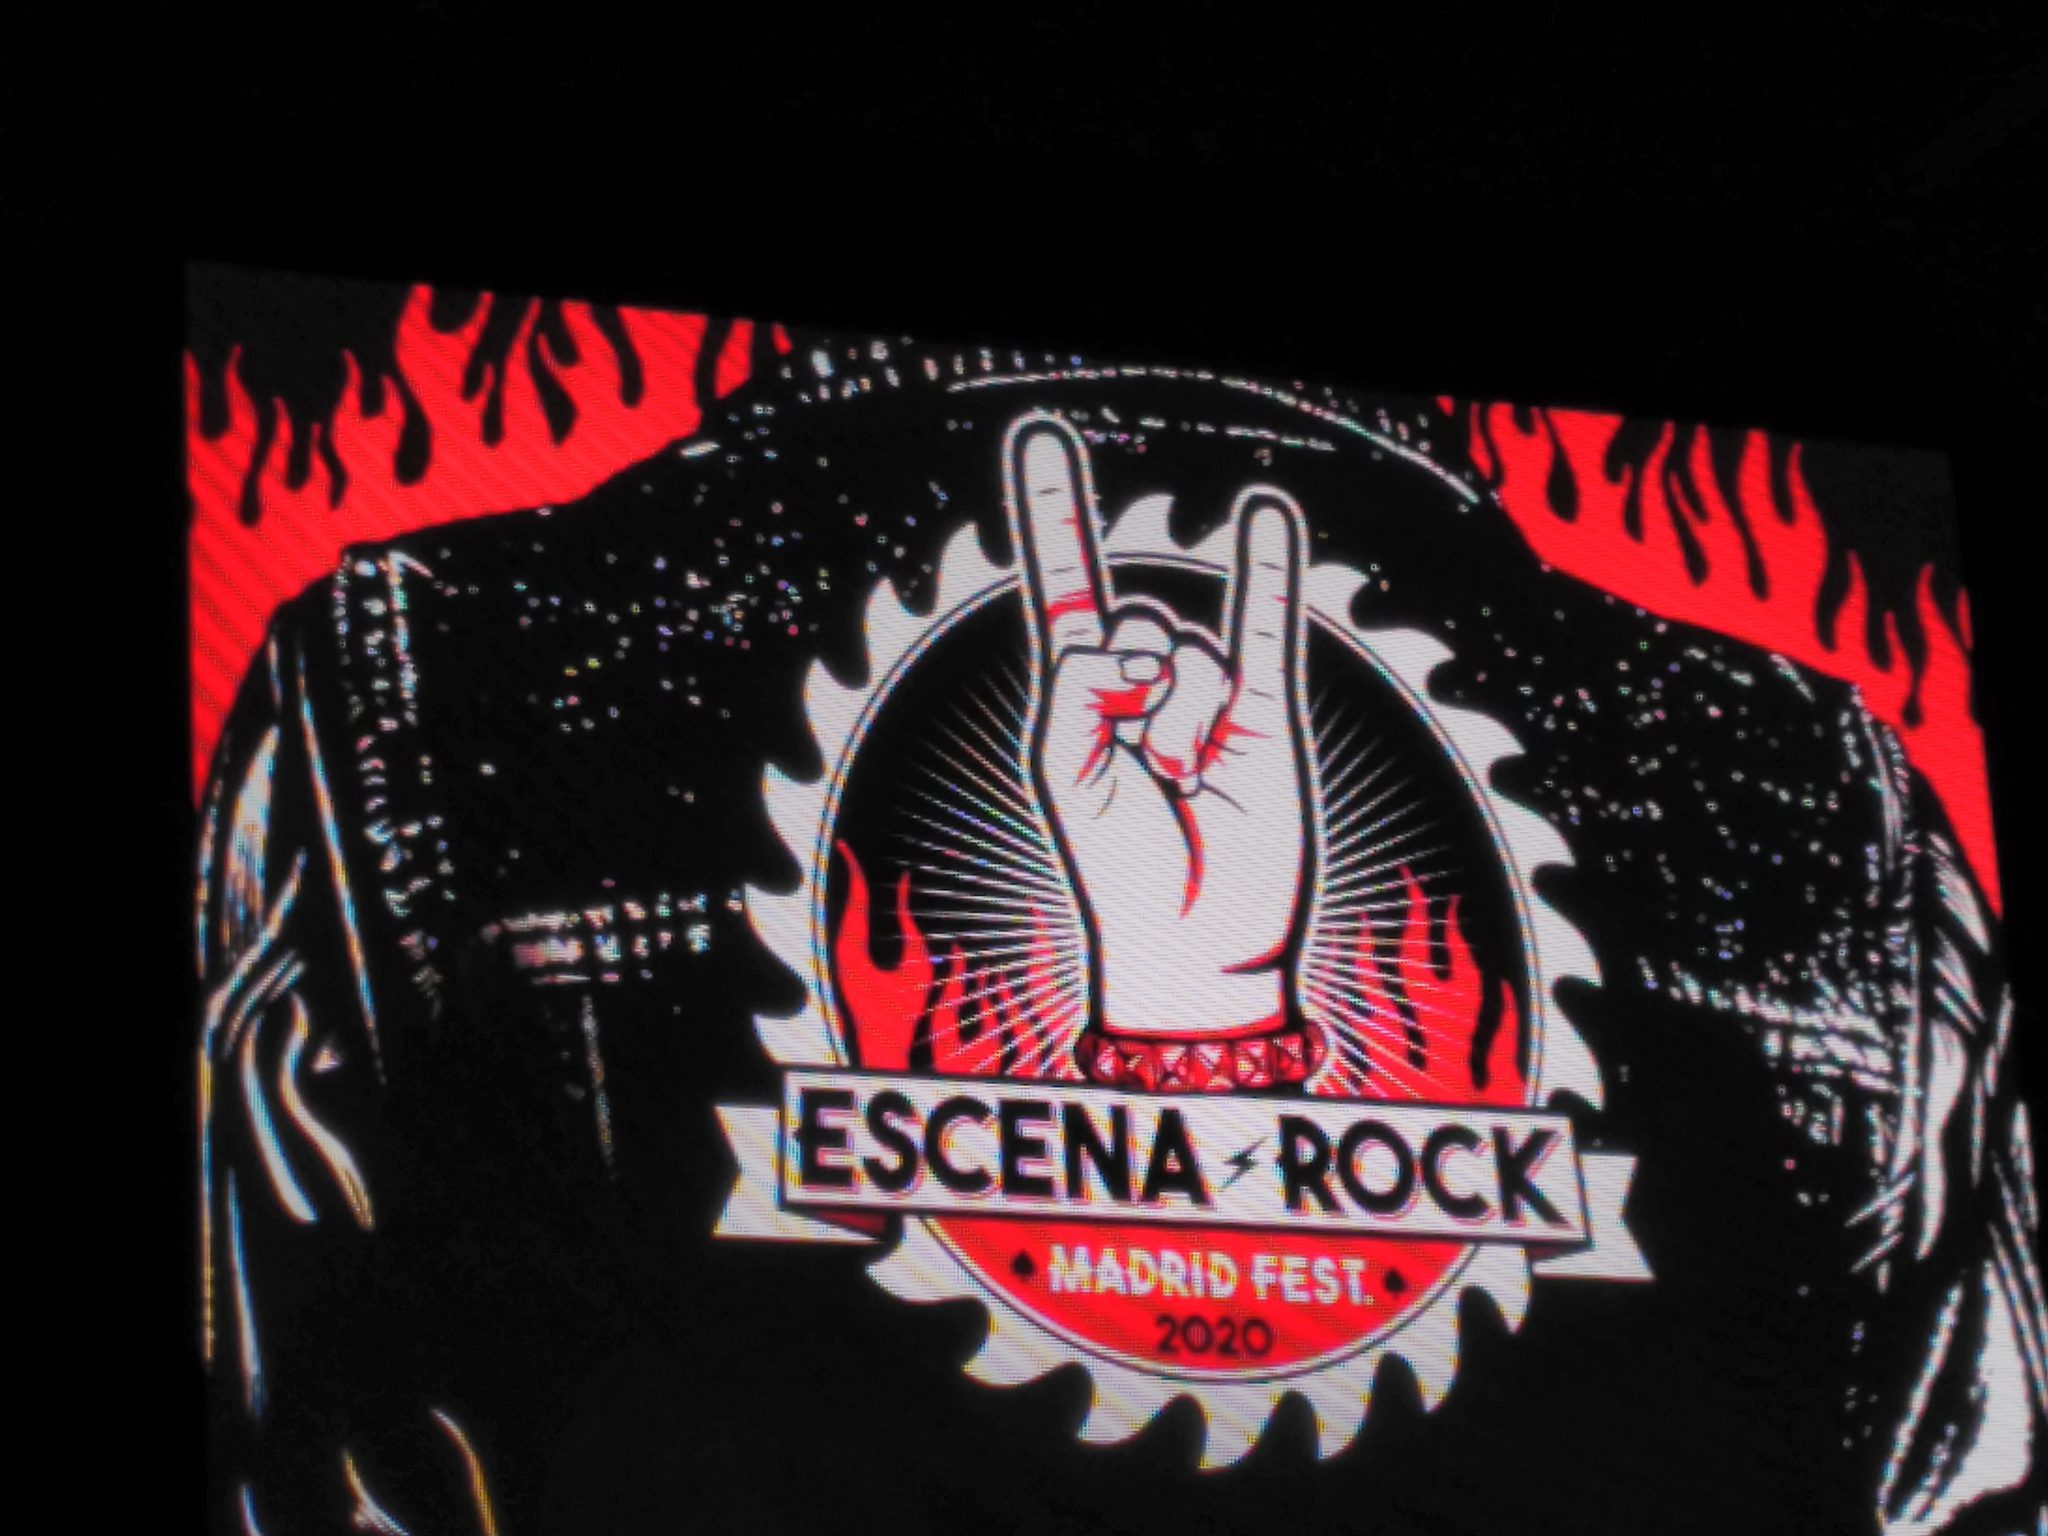 Crónica del Escena Rock, Madrid, 15/02/2020